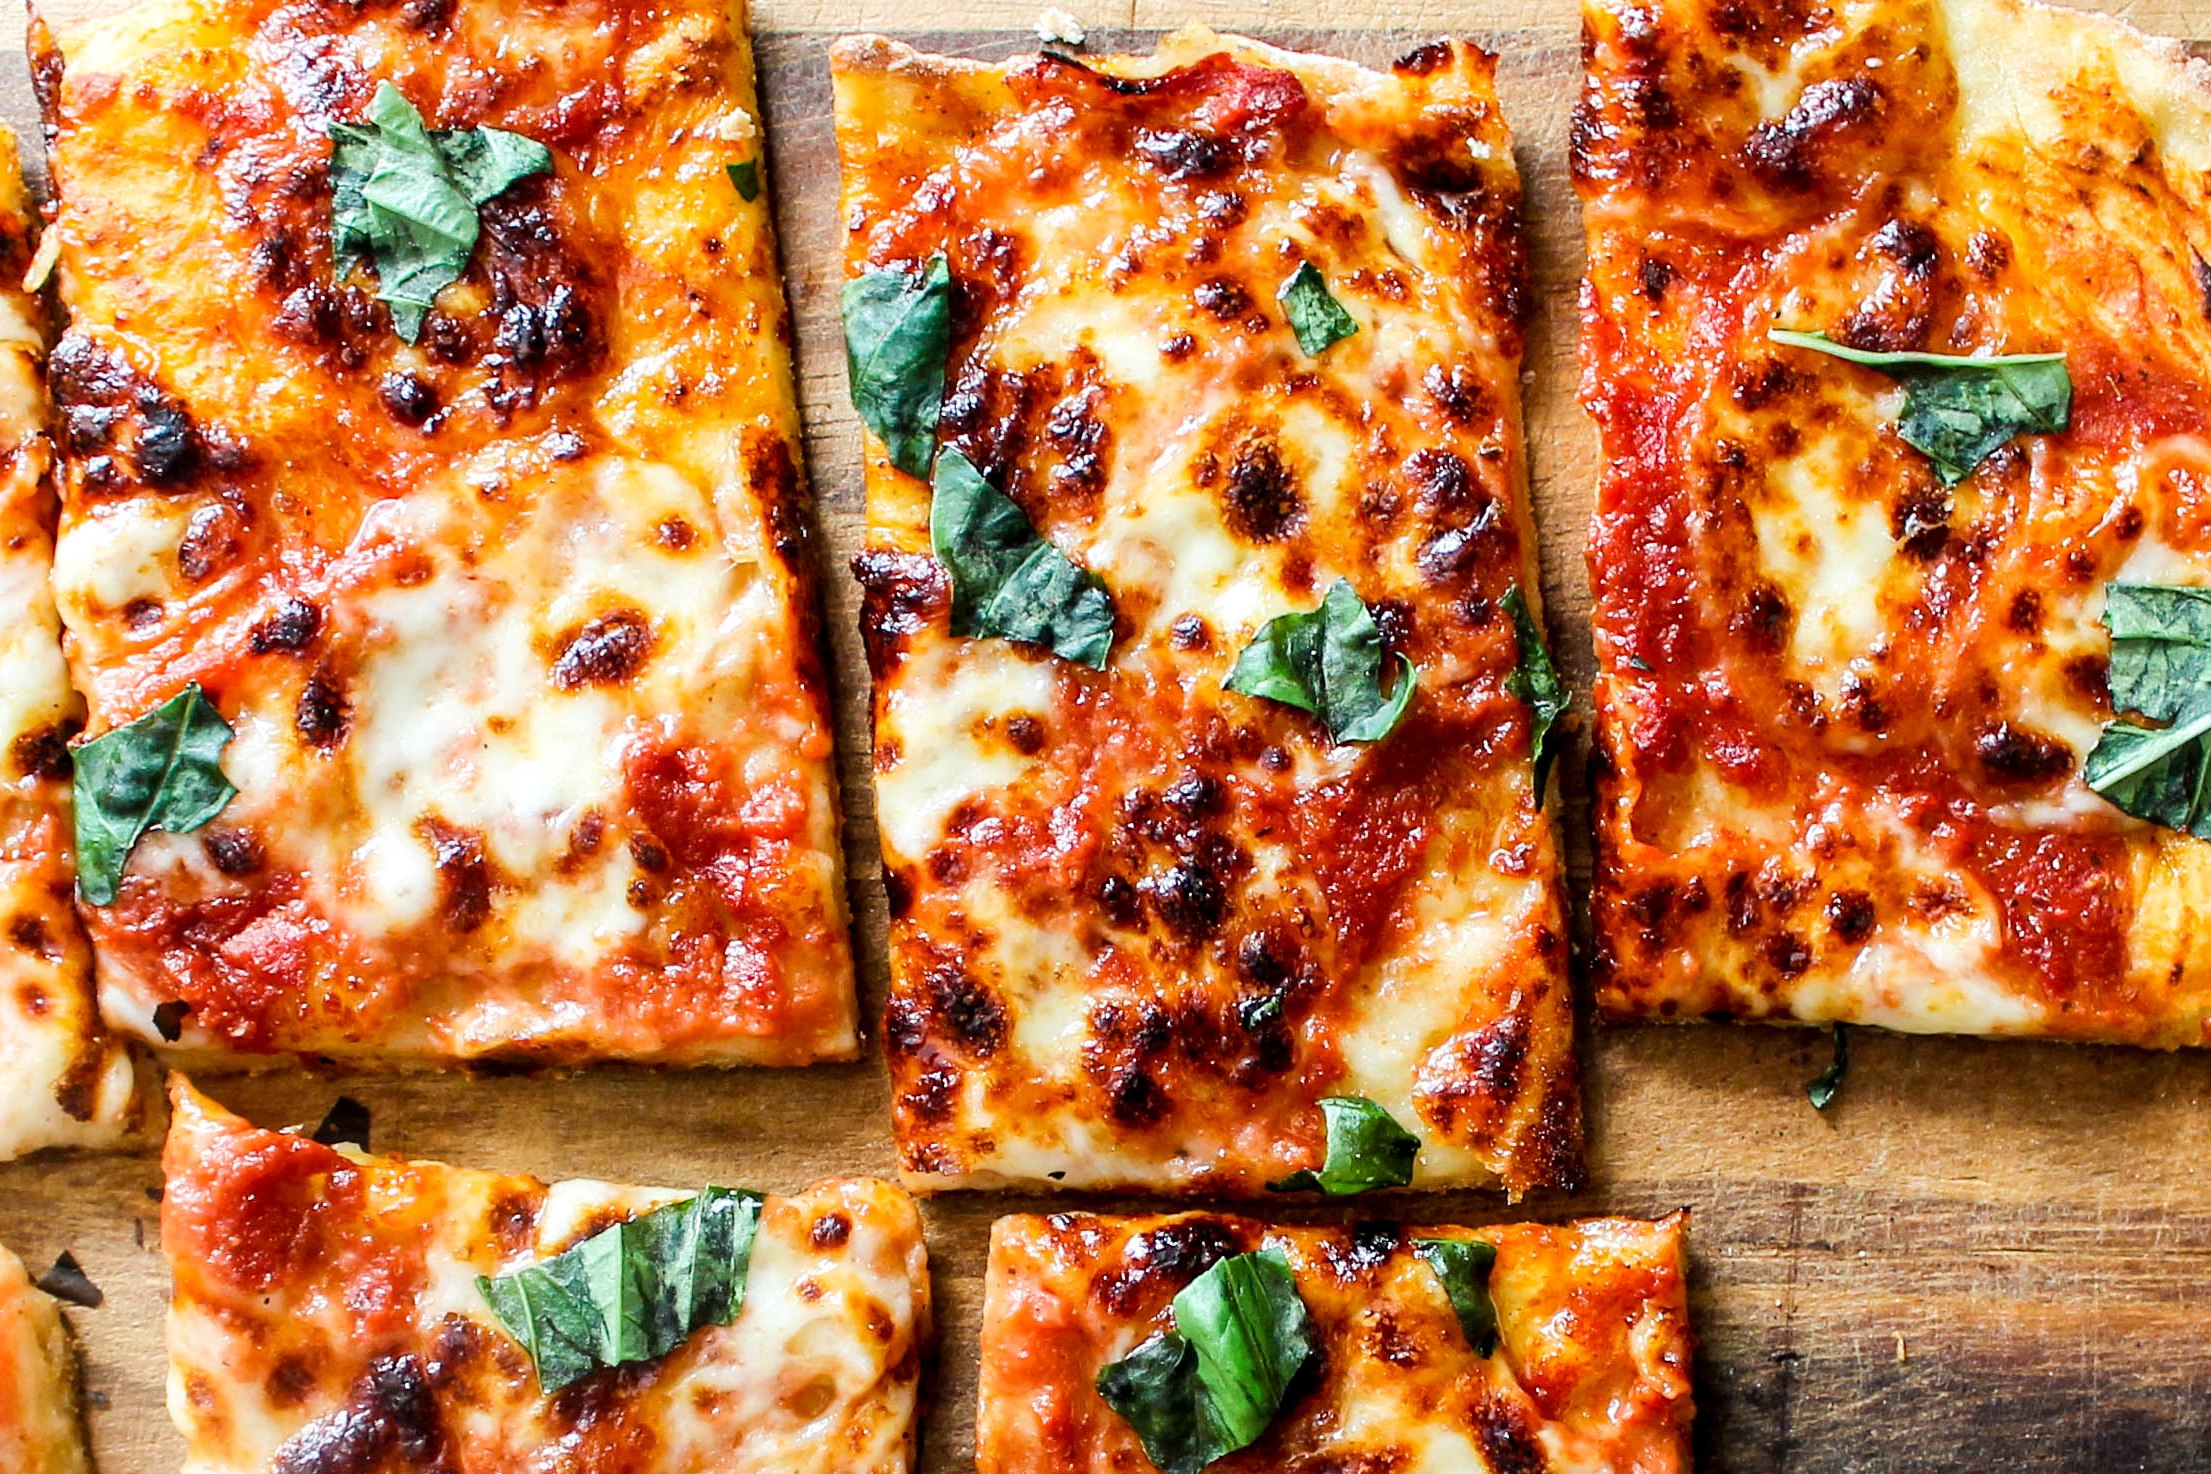 Gluten-Free Pan Pizza Recipe